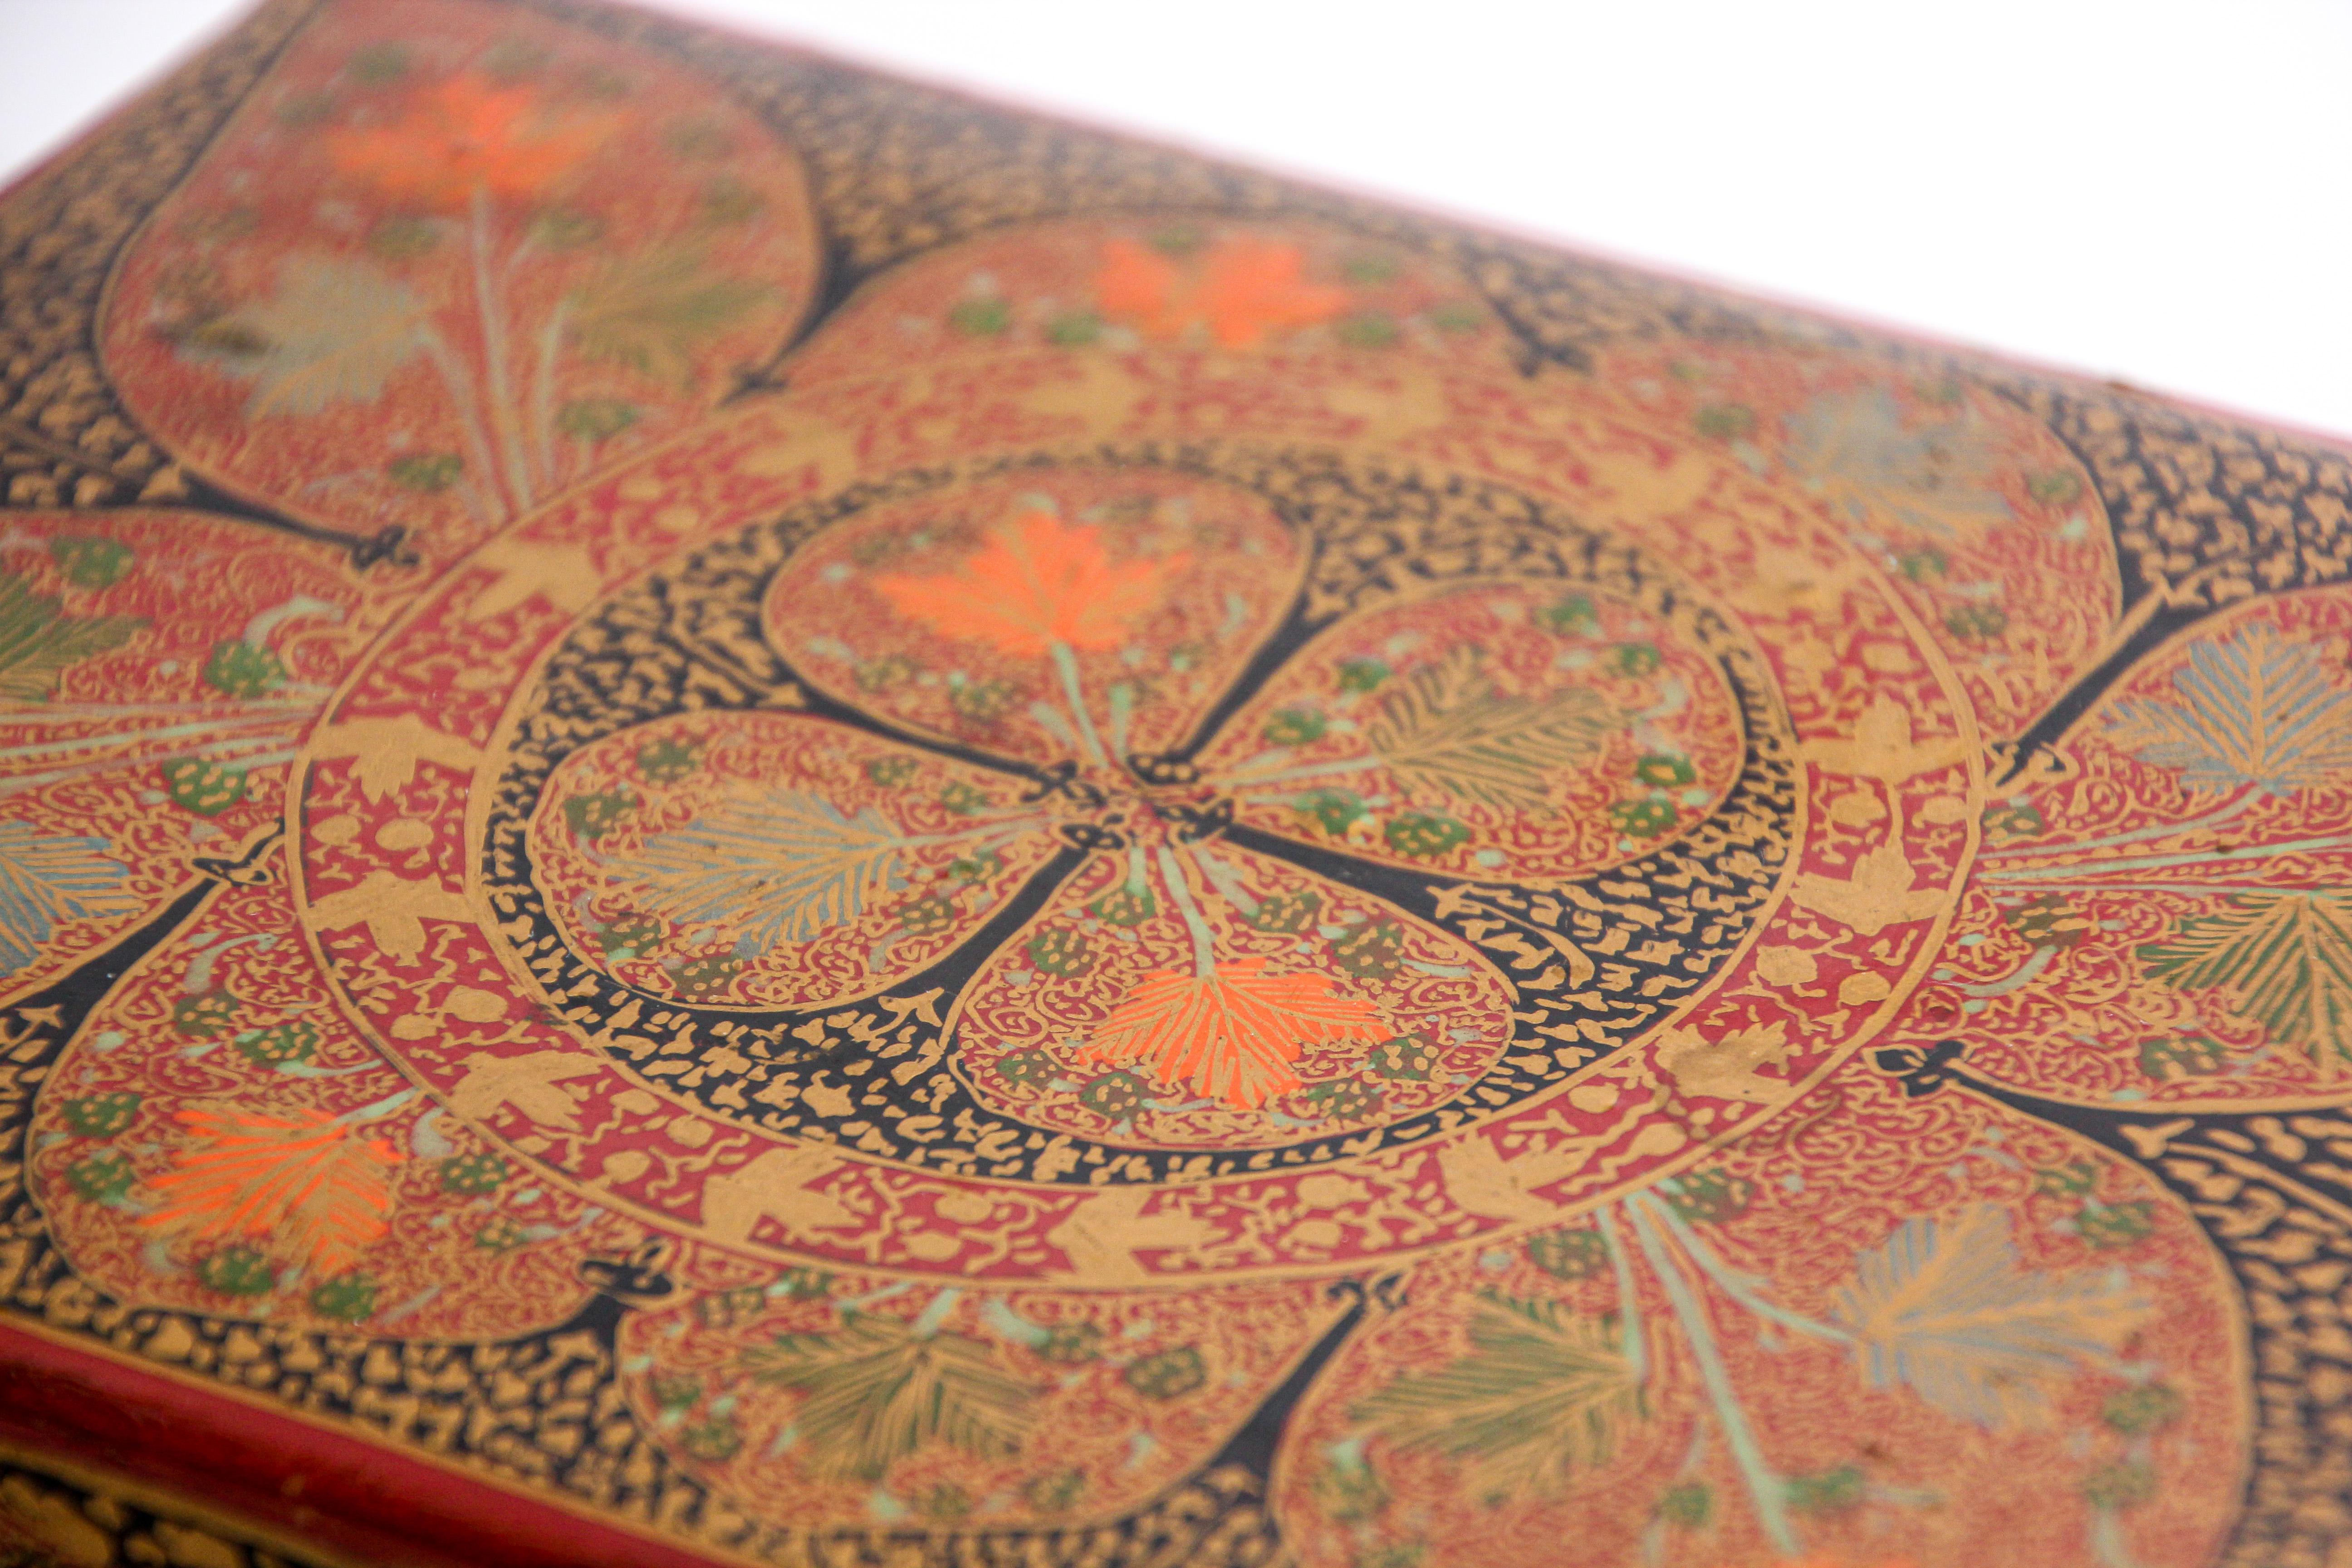 Indian Hand Painted Rajasthani Moorish Lacquer Box